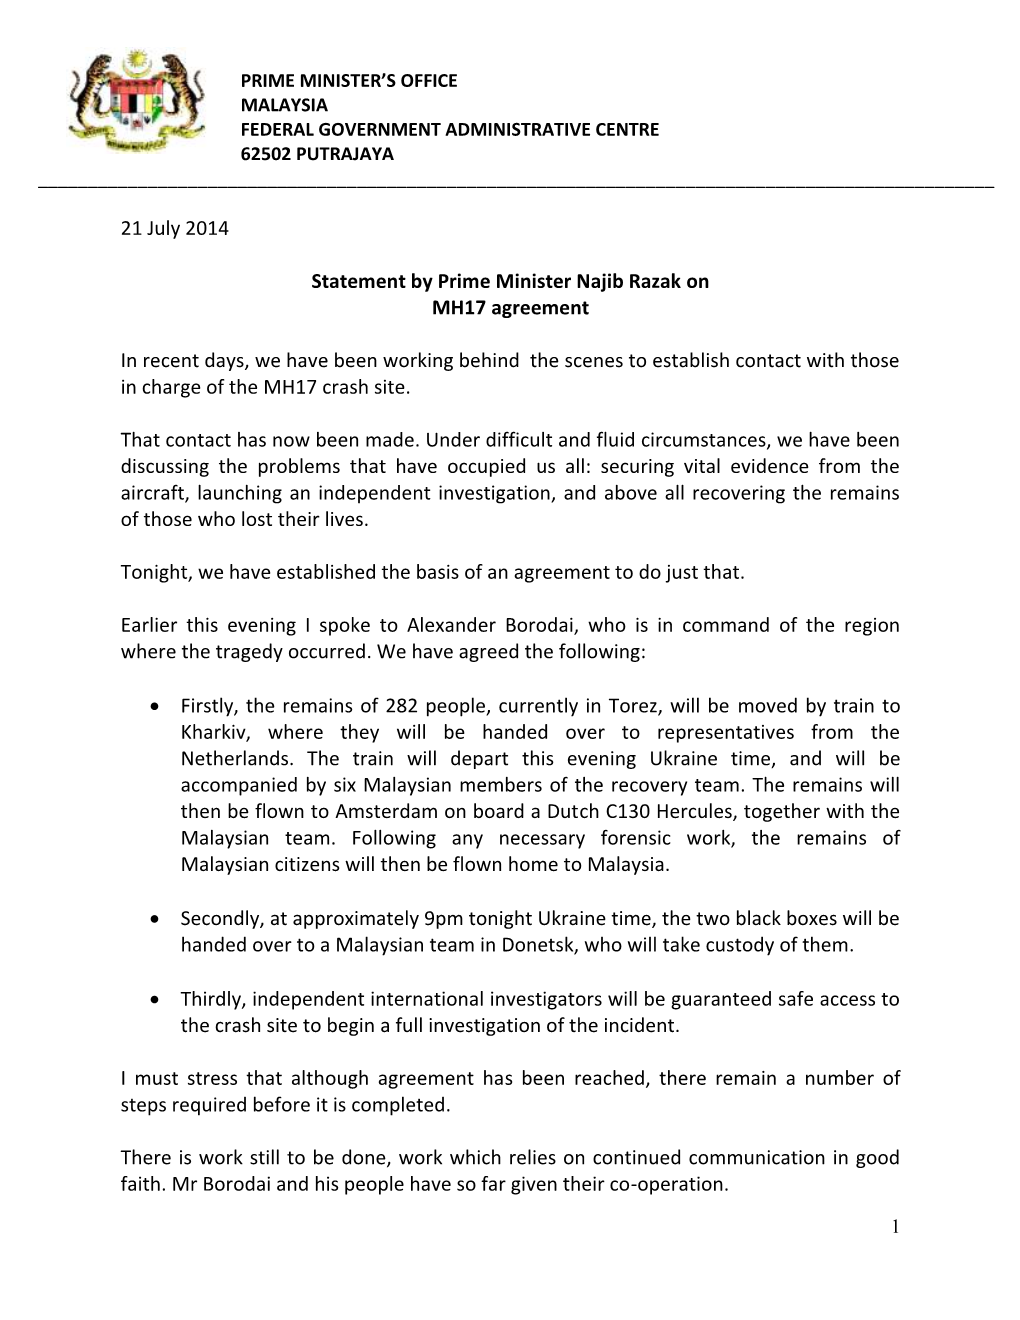 Prime Minister Najib Razak Statement on MH17 Agreement on 21 July 2014